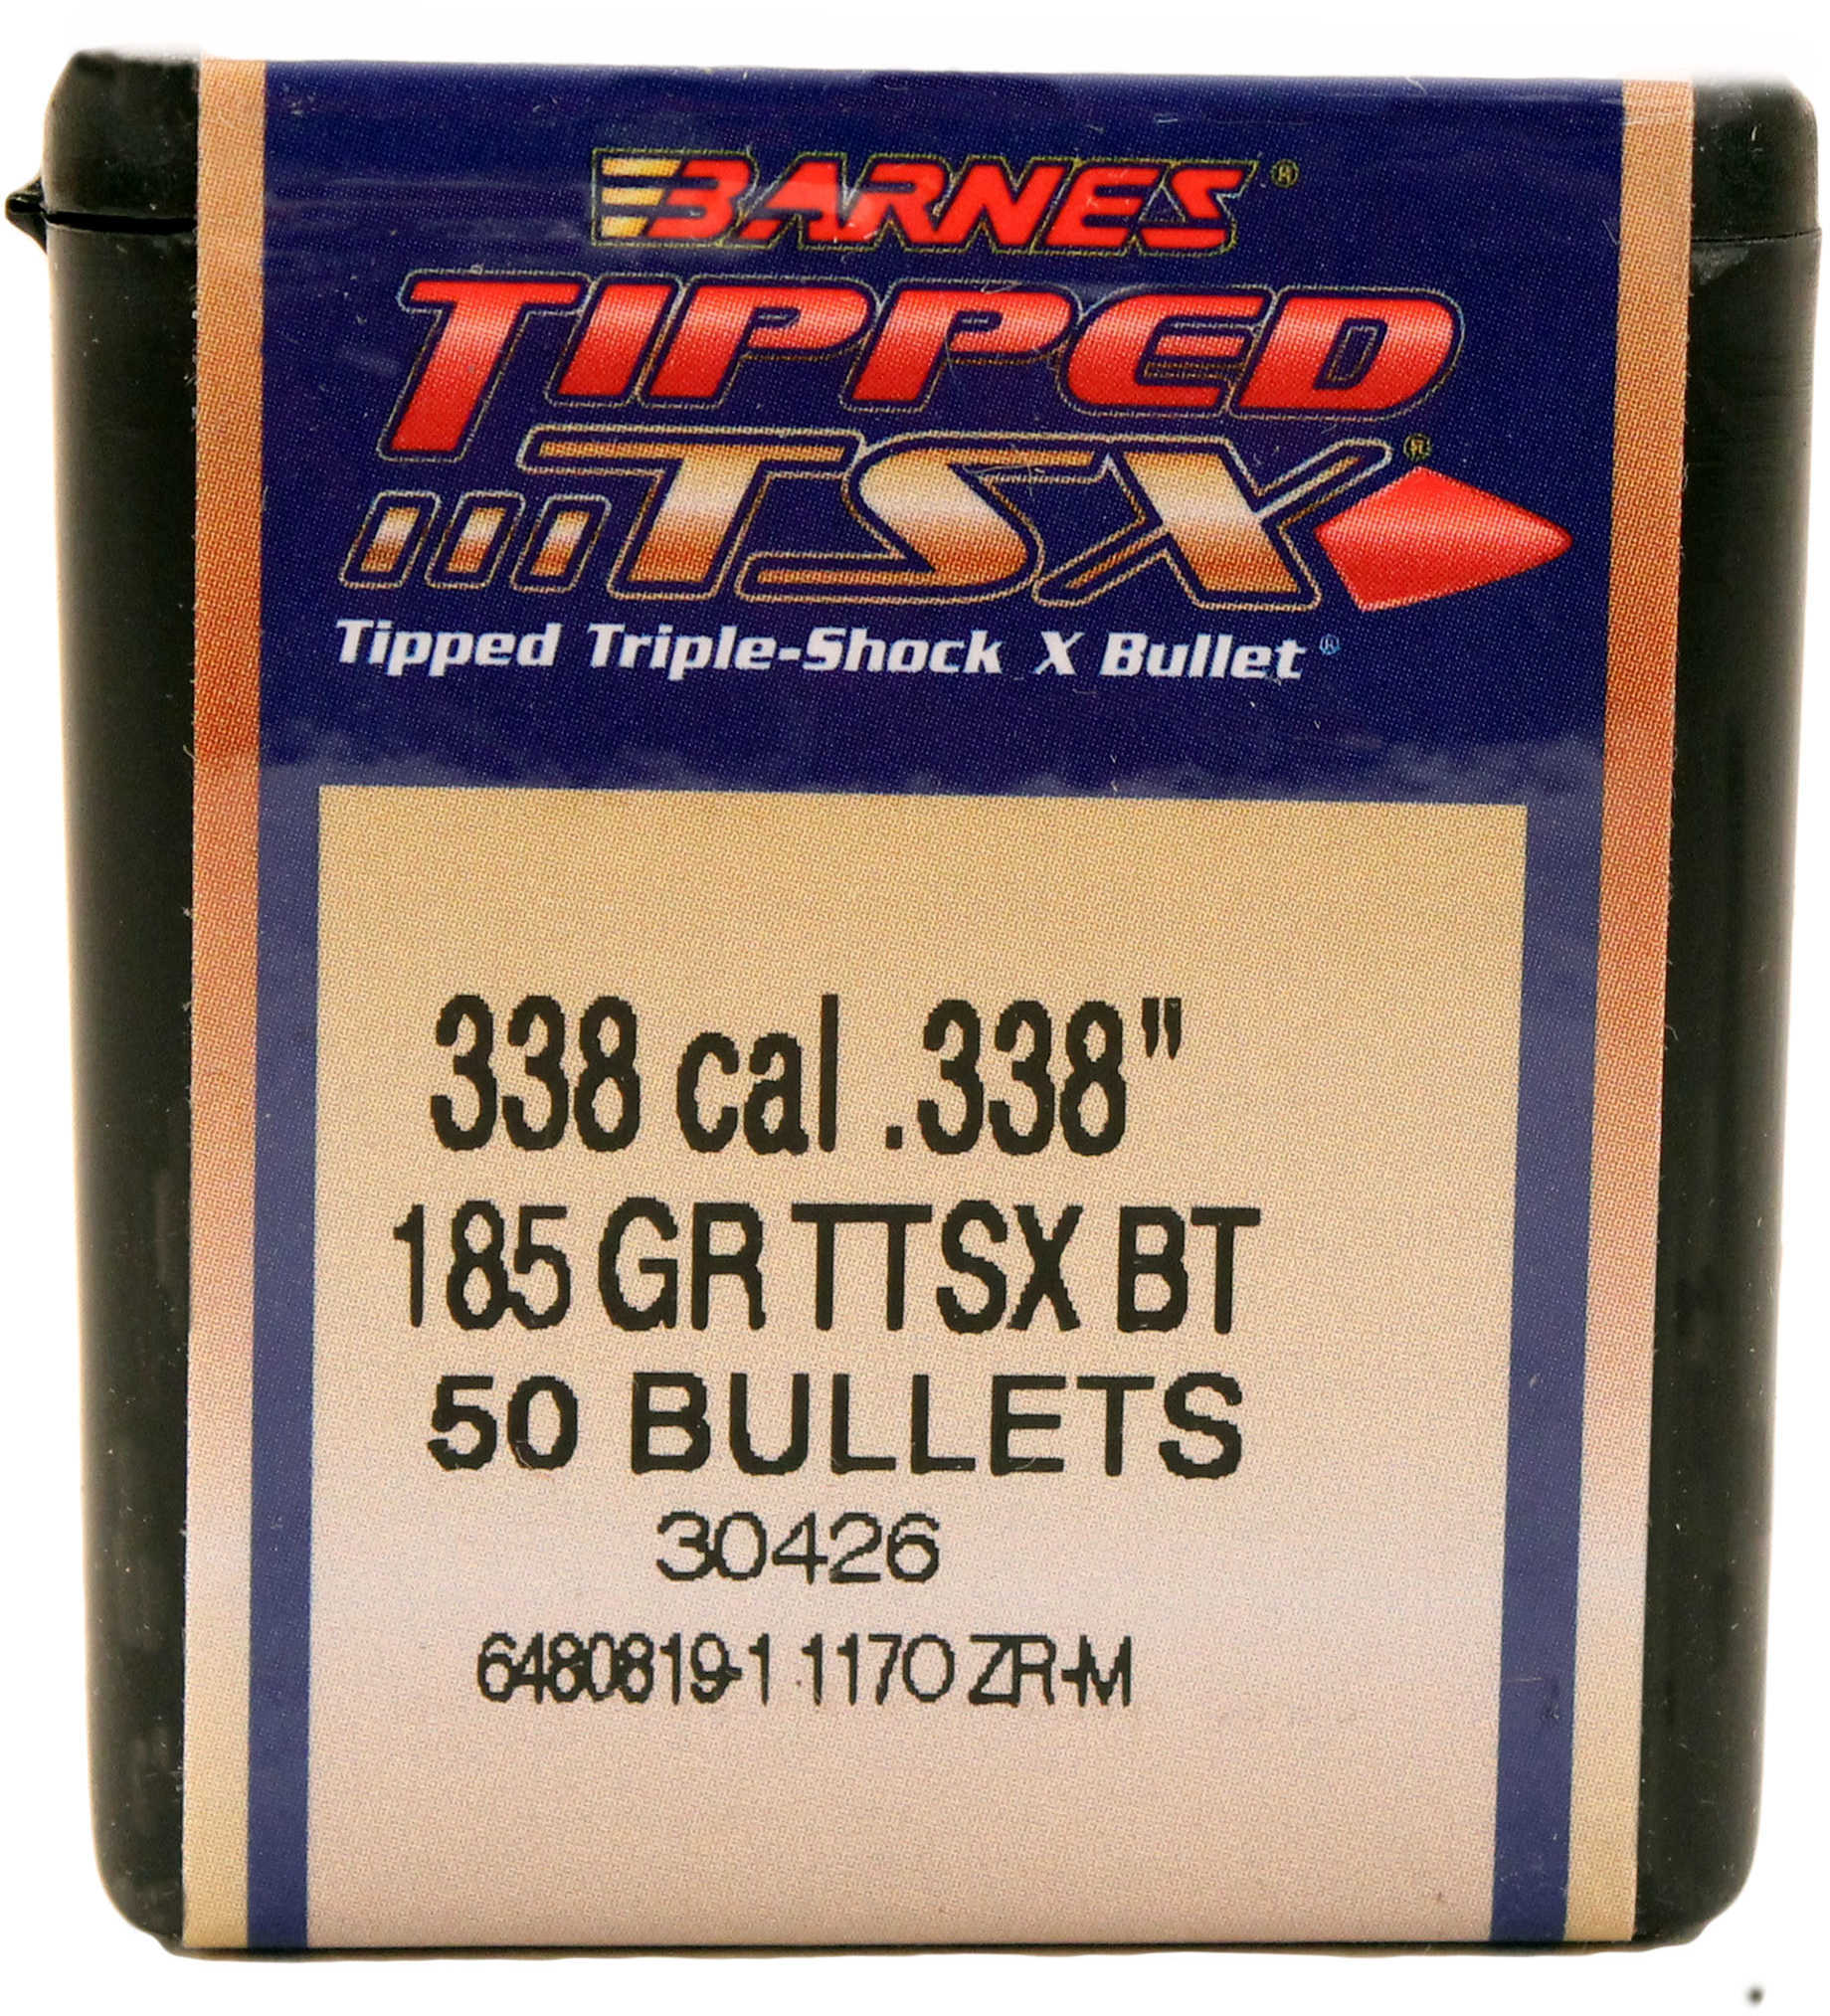 Barnes Bullets 338 Caliber .338" 185 Grains TTSX Boat Tail (Per 50) 33874